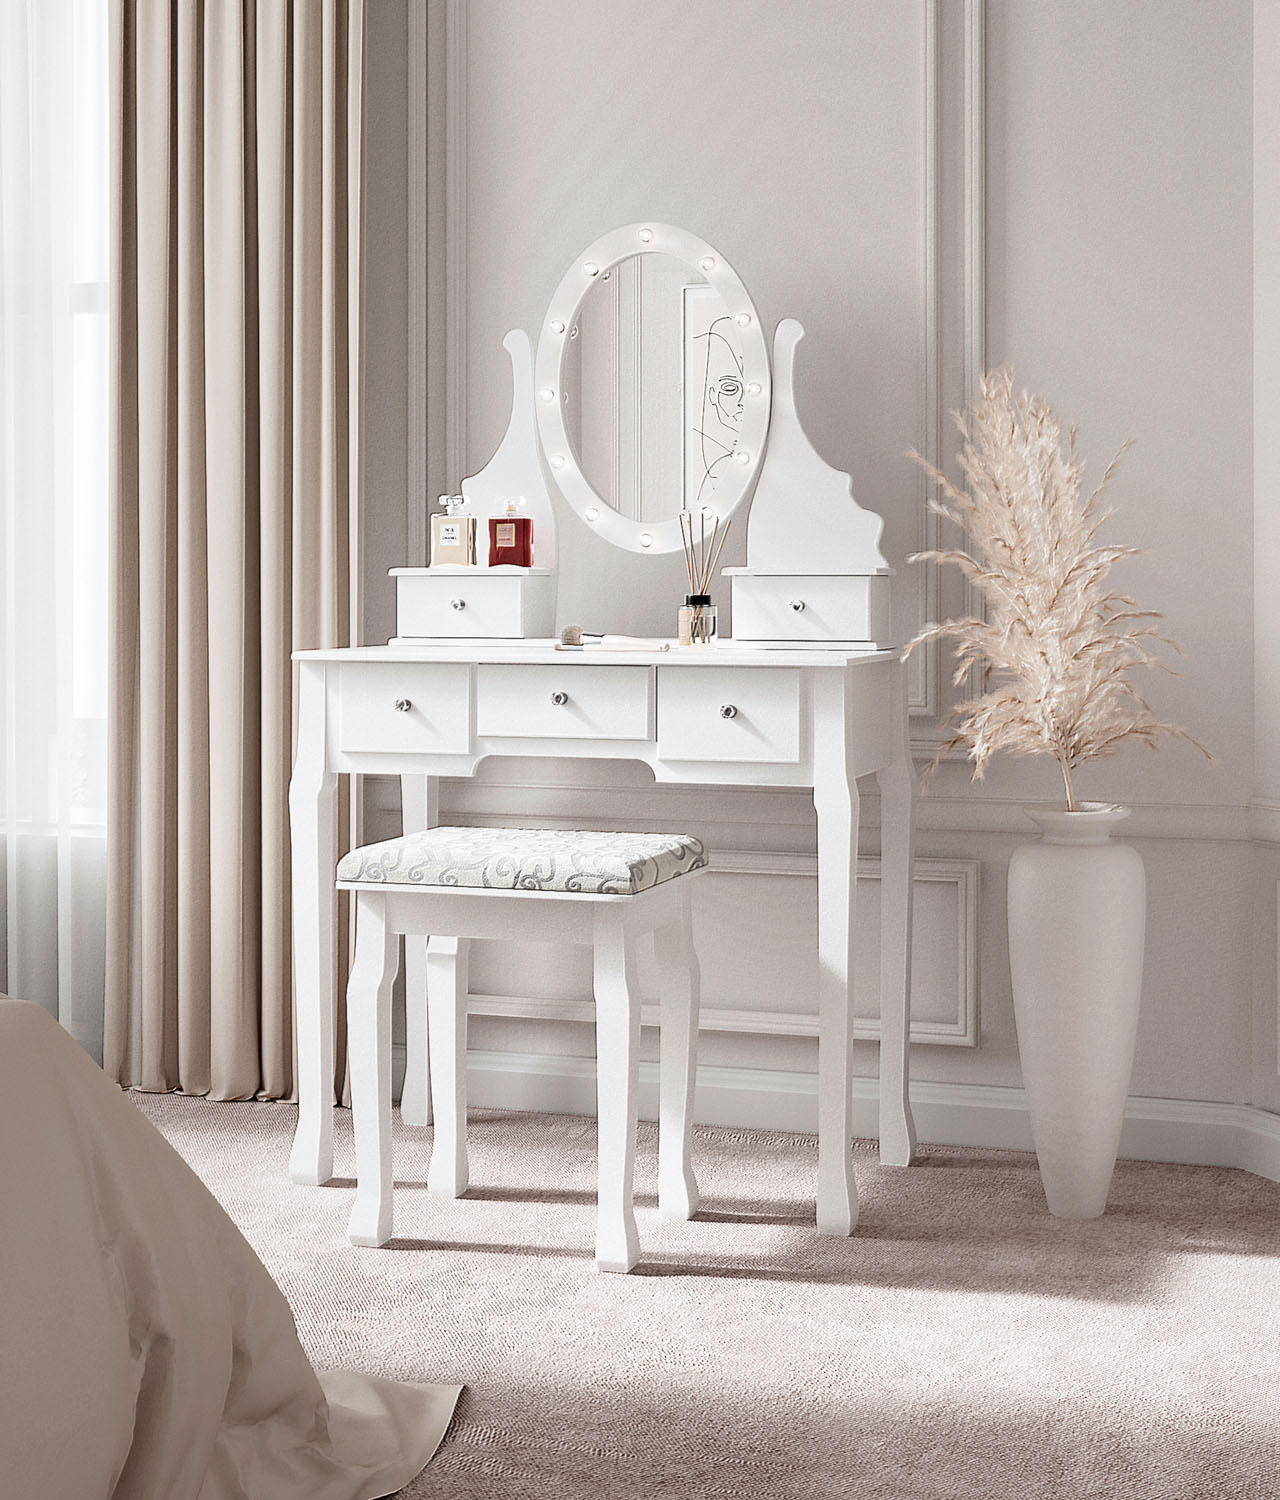 CARME Beverley Dior Dressing Table with LED Mirror Lights Makeup Storage Stool Set Bedroom